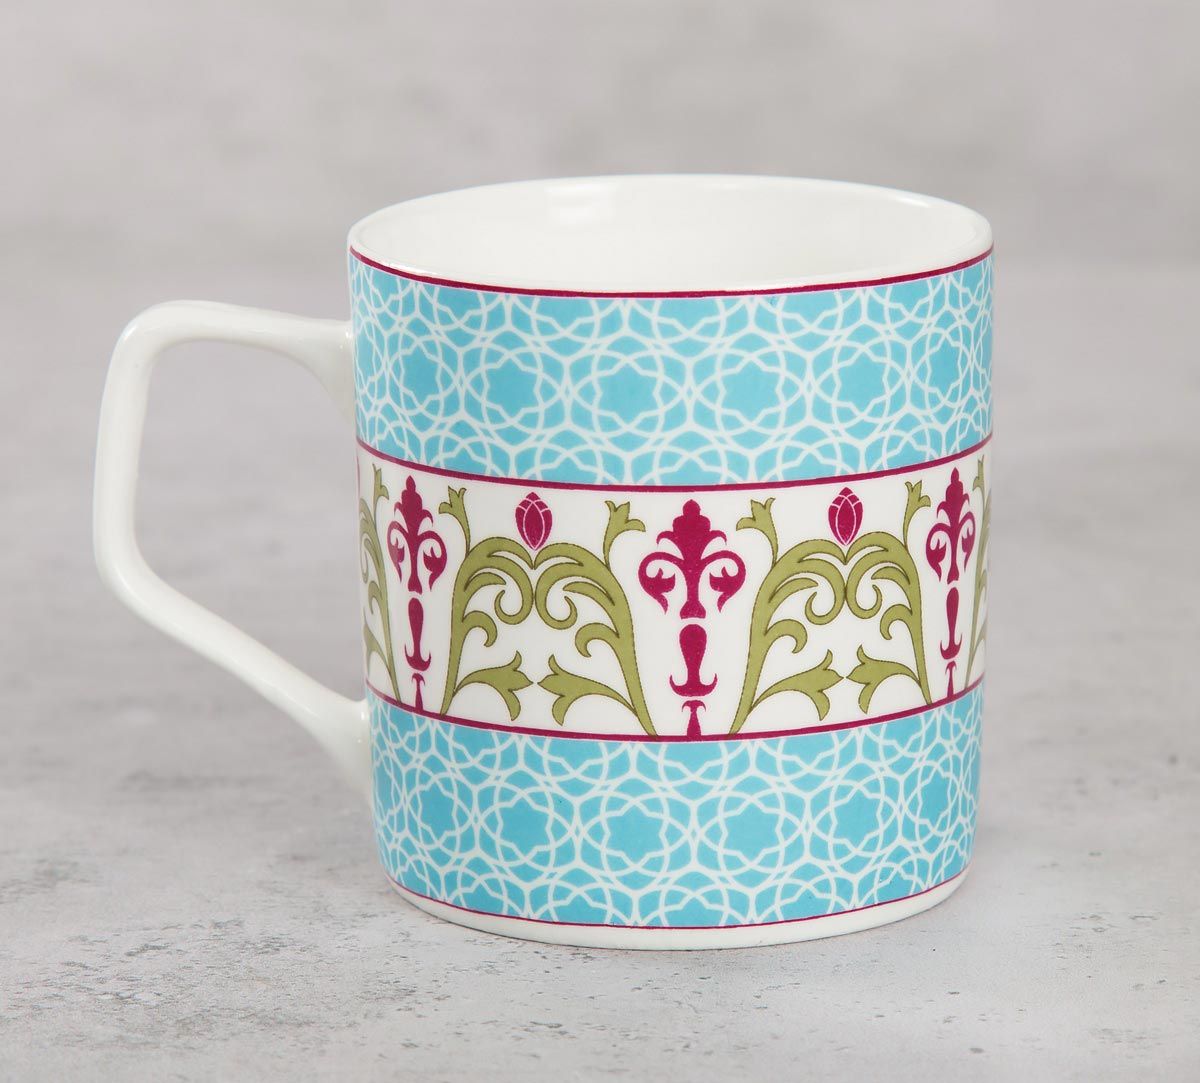 Shop for elegant coffee mug designs online